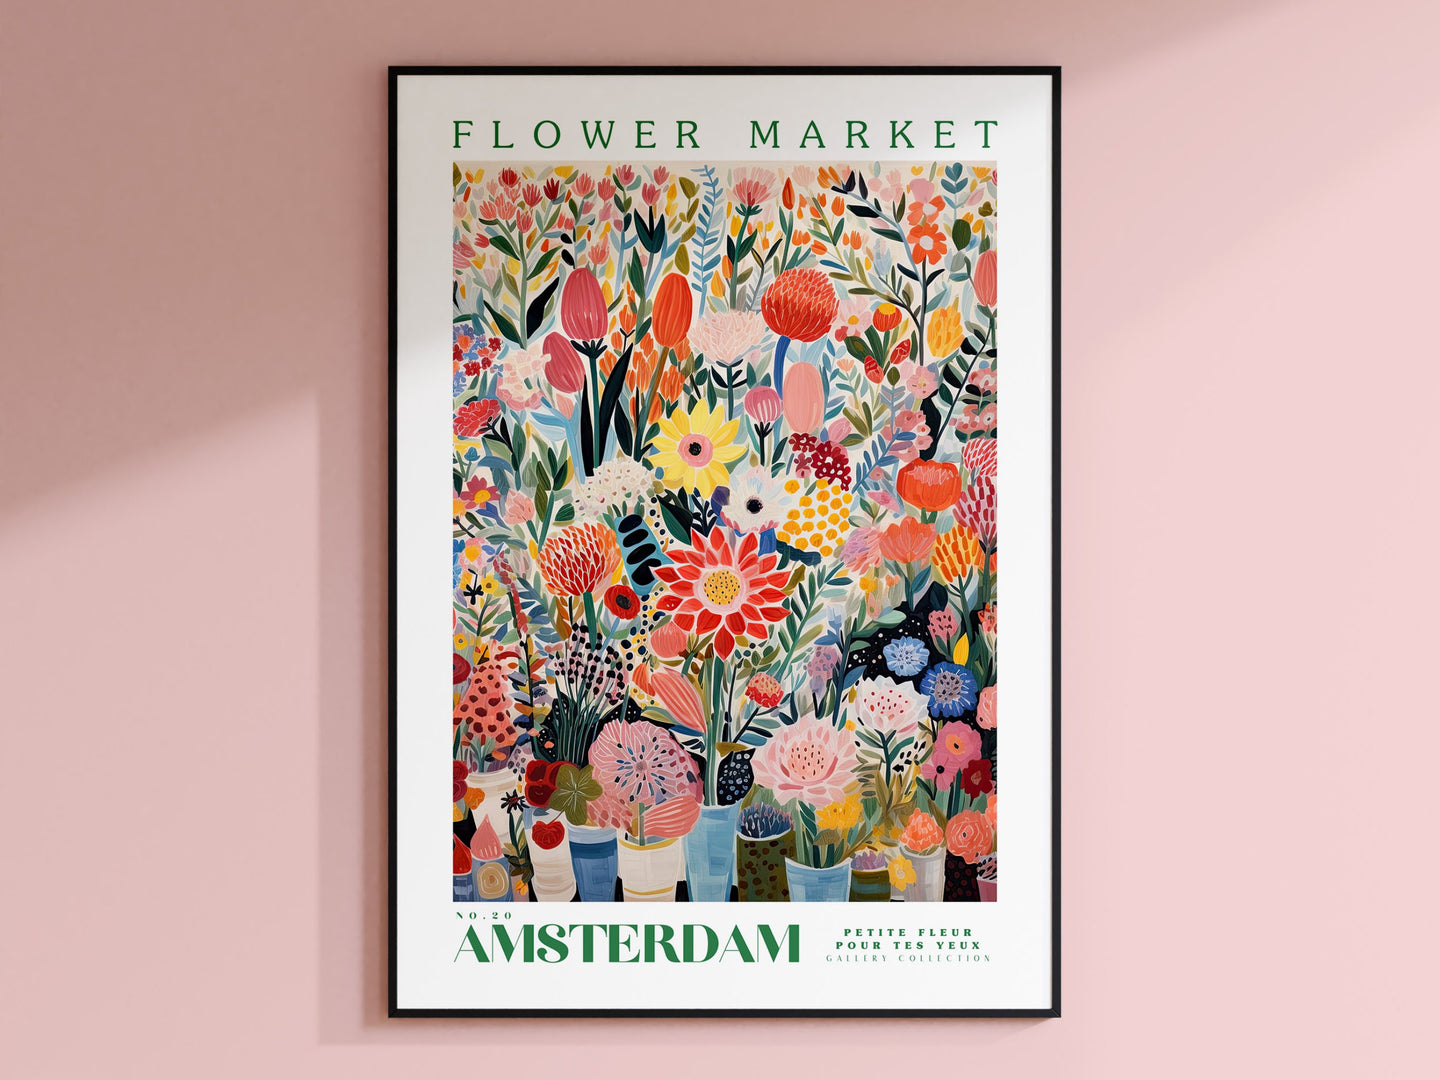 Amsterdam Flower Market Poster, Amsterdam Travel Art, Botanical Wall Art, Flower Wall Art, Floral Illustration, Nursery Kids Wall Art, Red